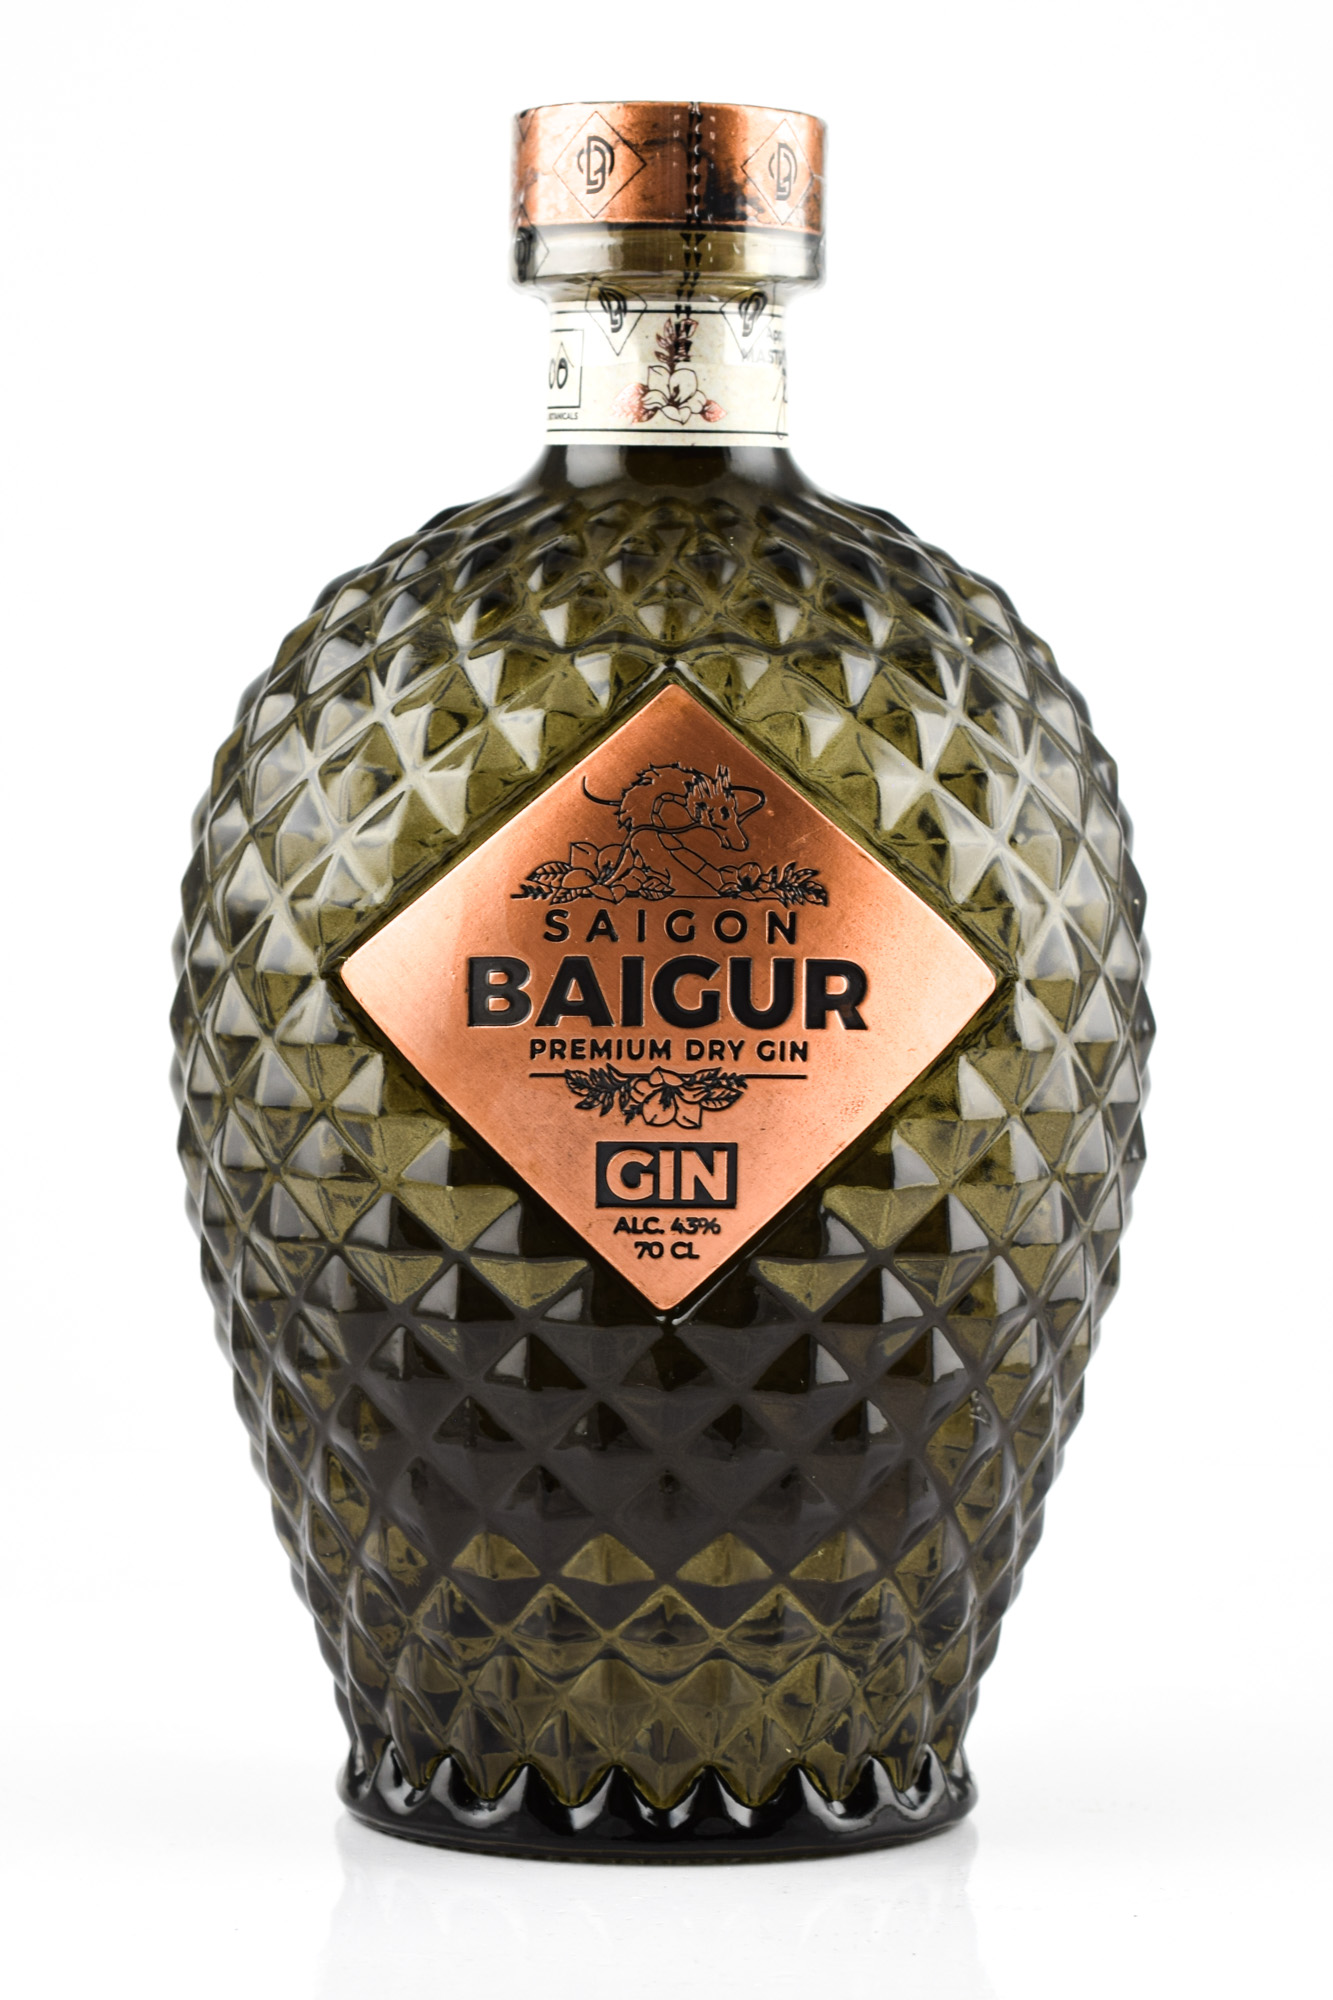 Saigon Baigur Premium Gin now! Home explore Malts Malts of Home Dry | of >> at